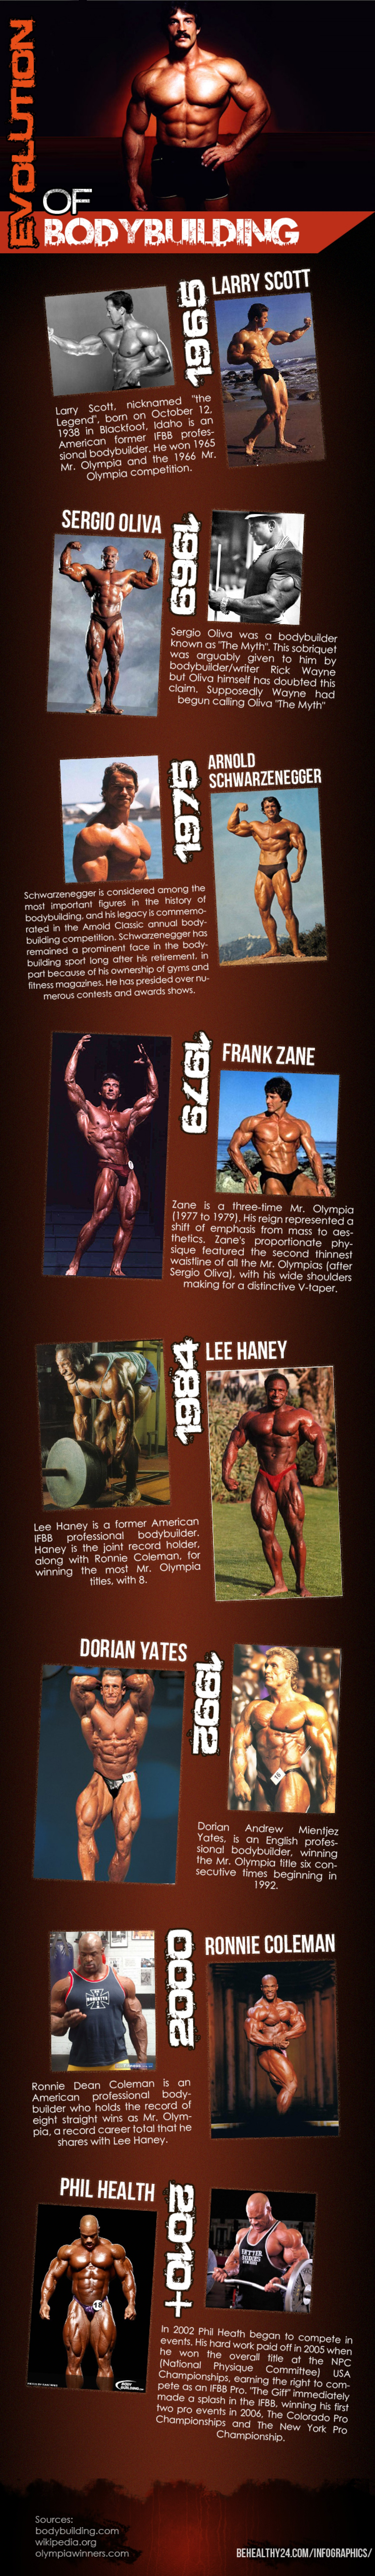 Evolution of Bodybuilding